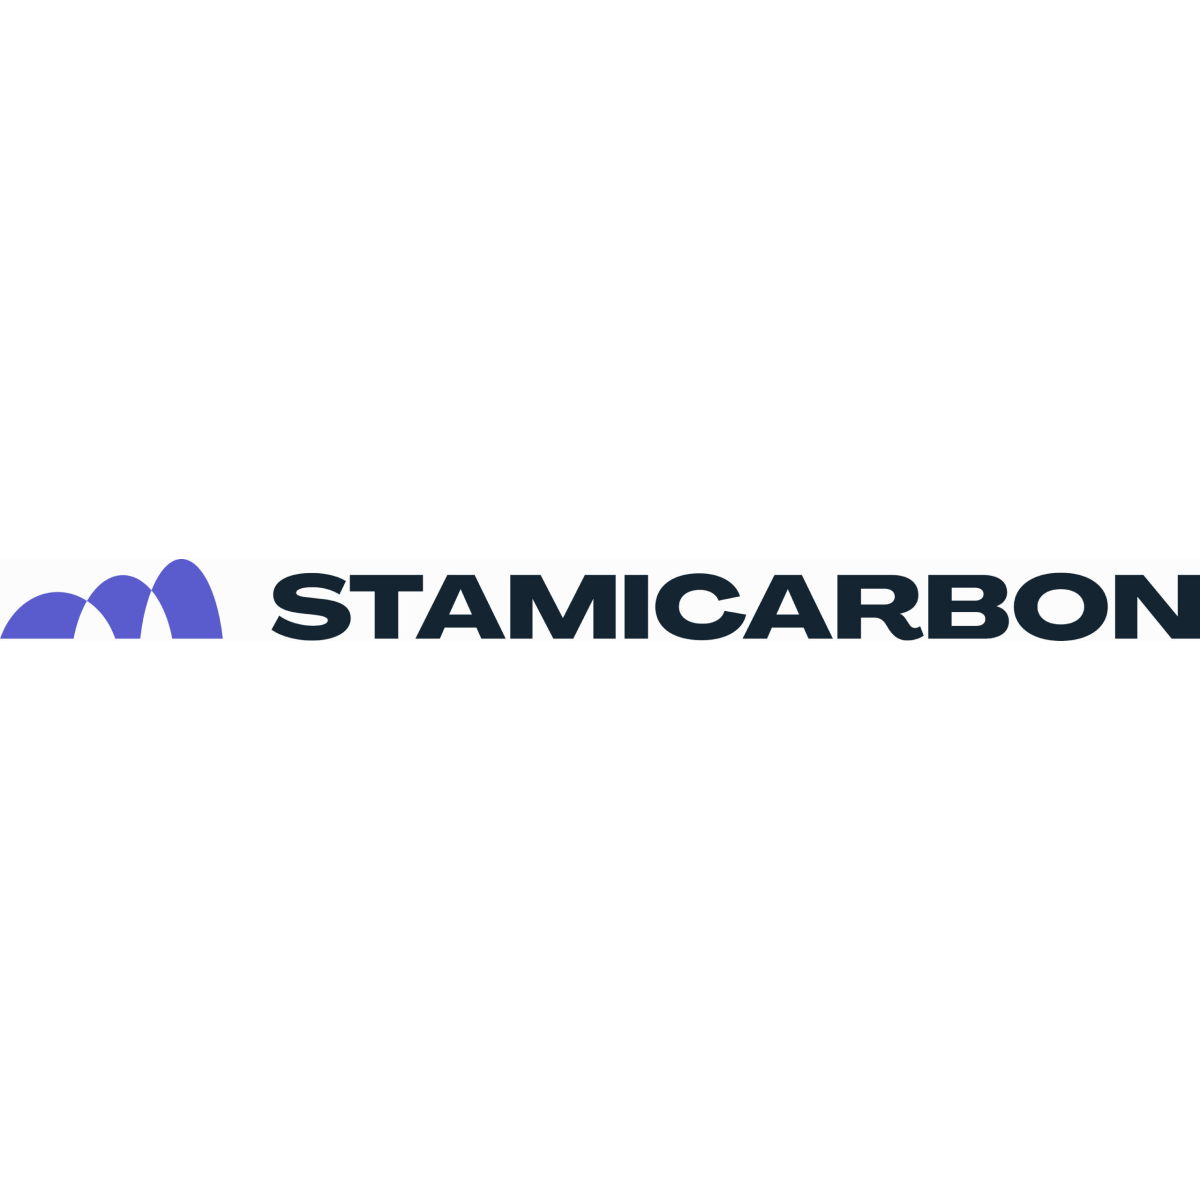 stamicarbon logo